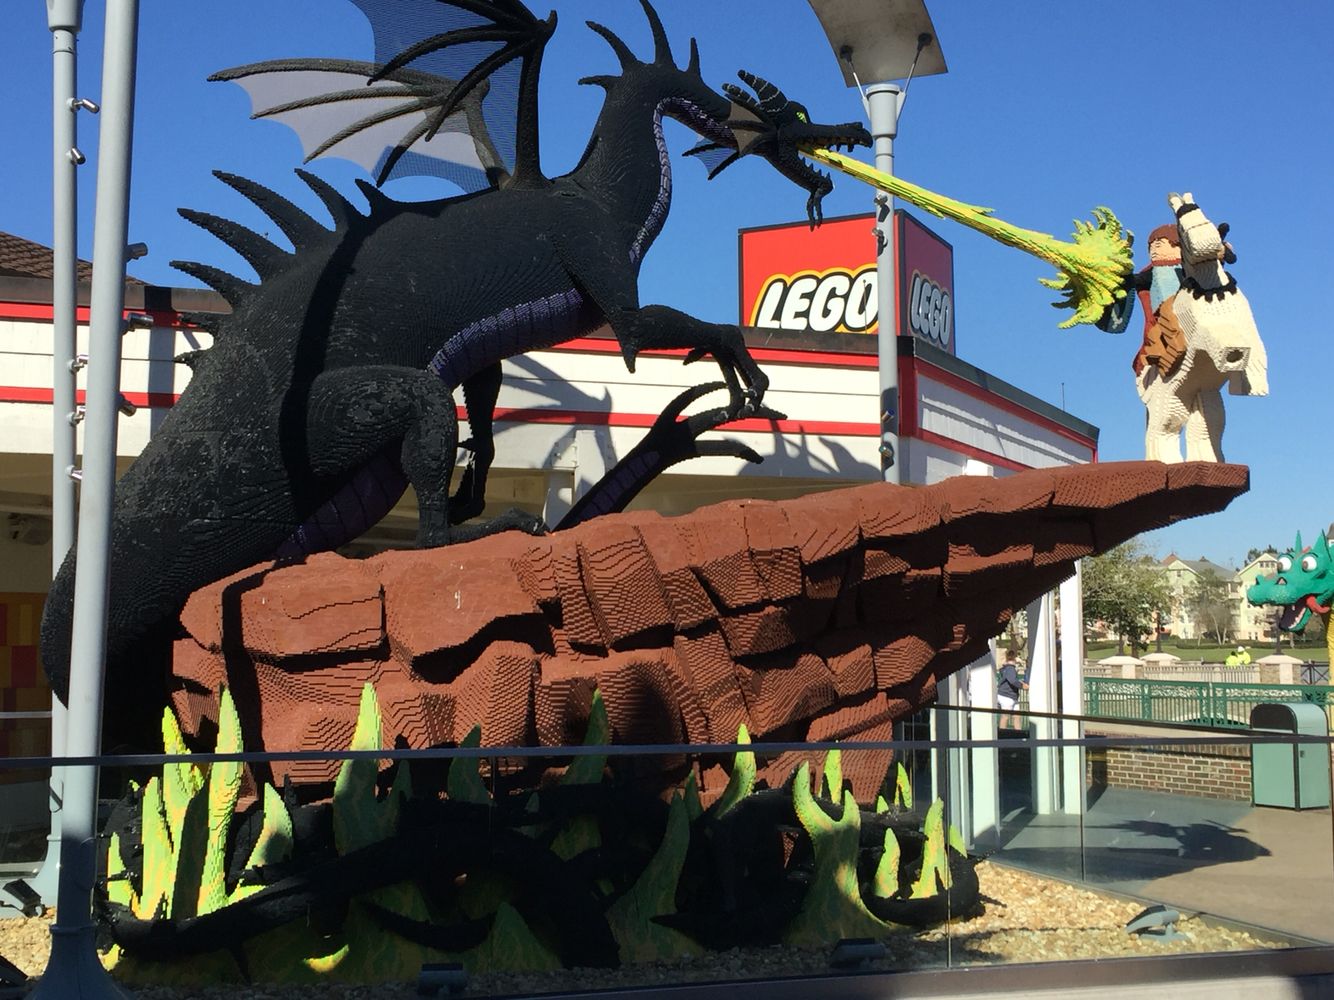 Lego Store - Disney Springs